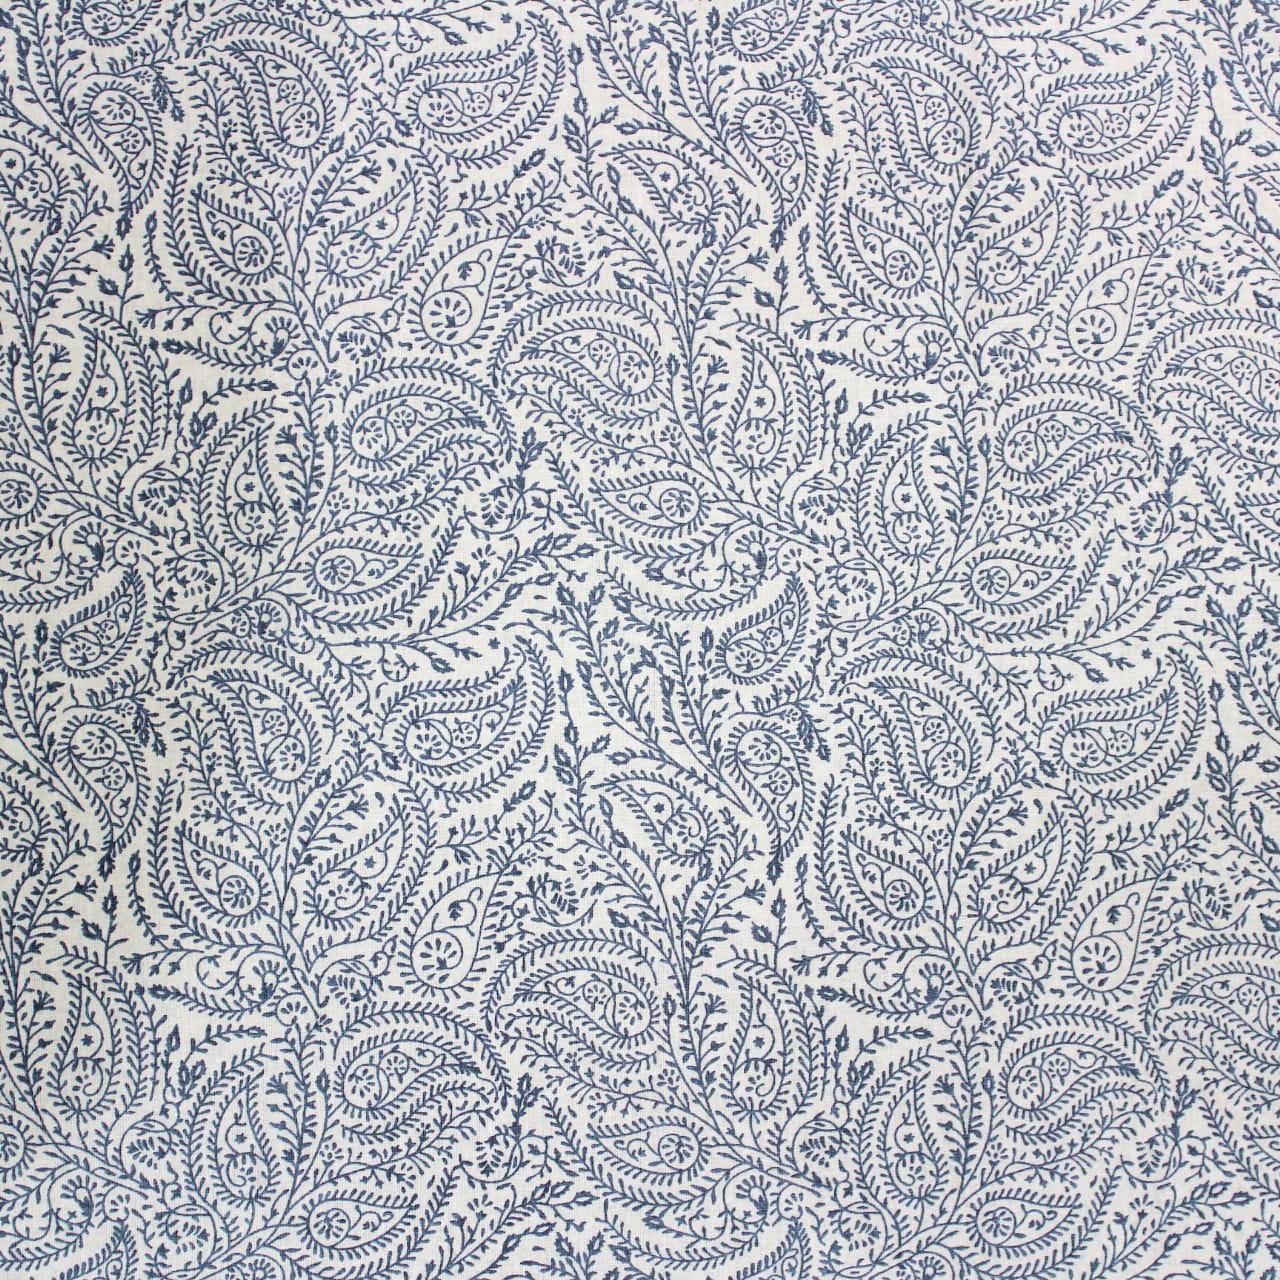 Printed Cotton 144 TC Duvet Cover - Blue